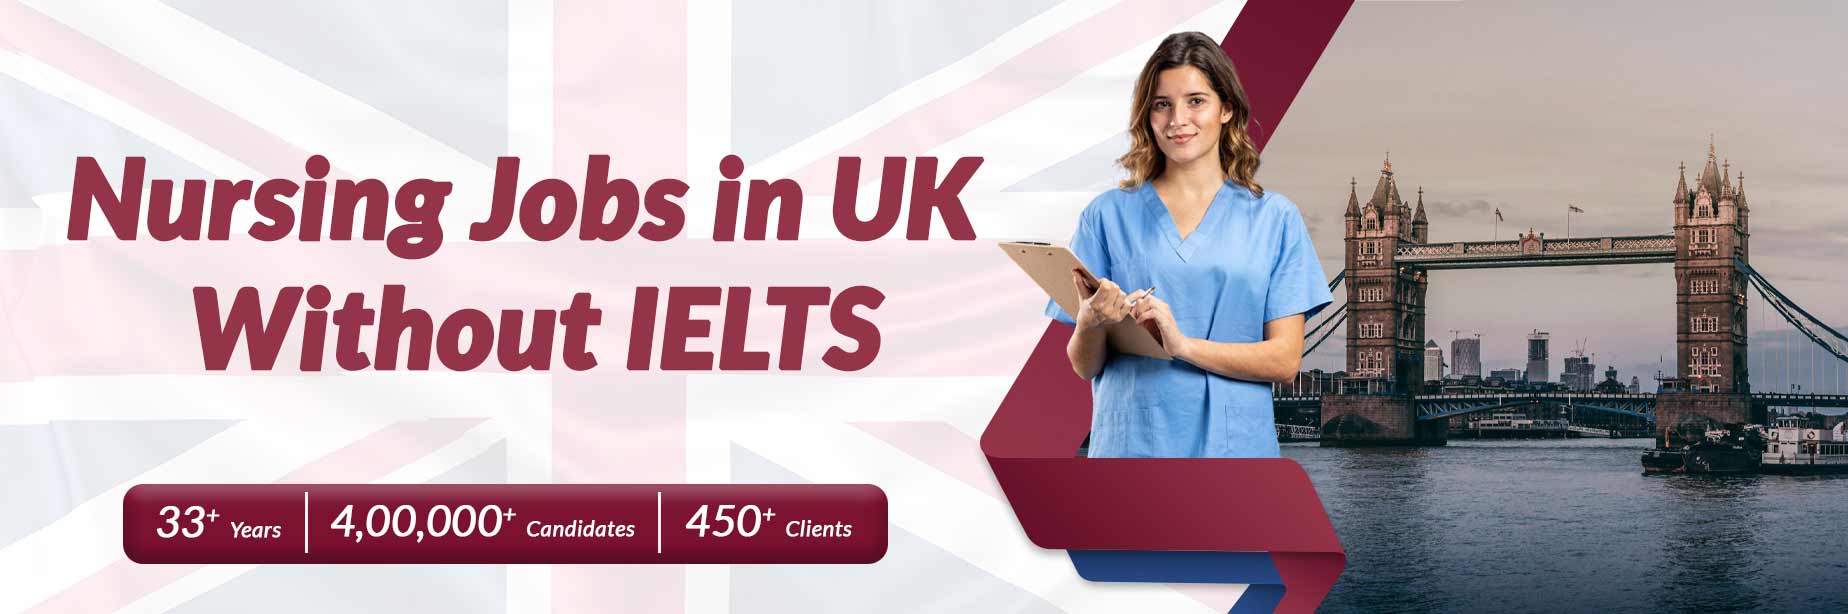 Nursing Jobs in UK Without IELTS